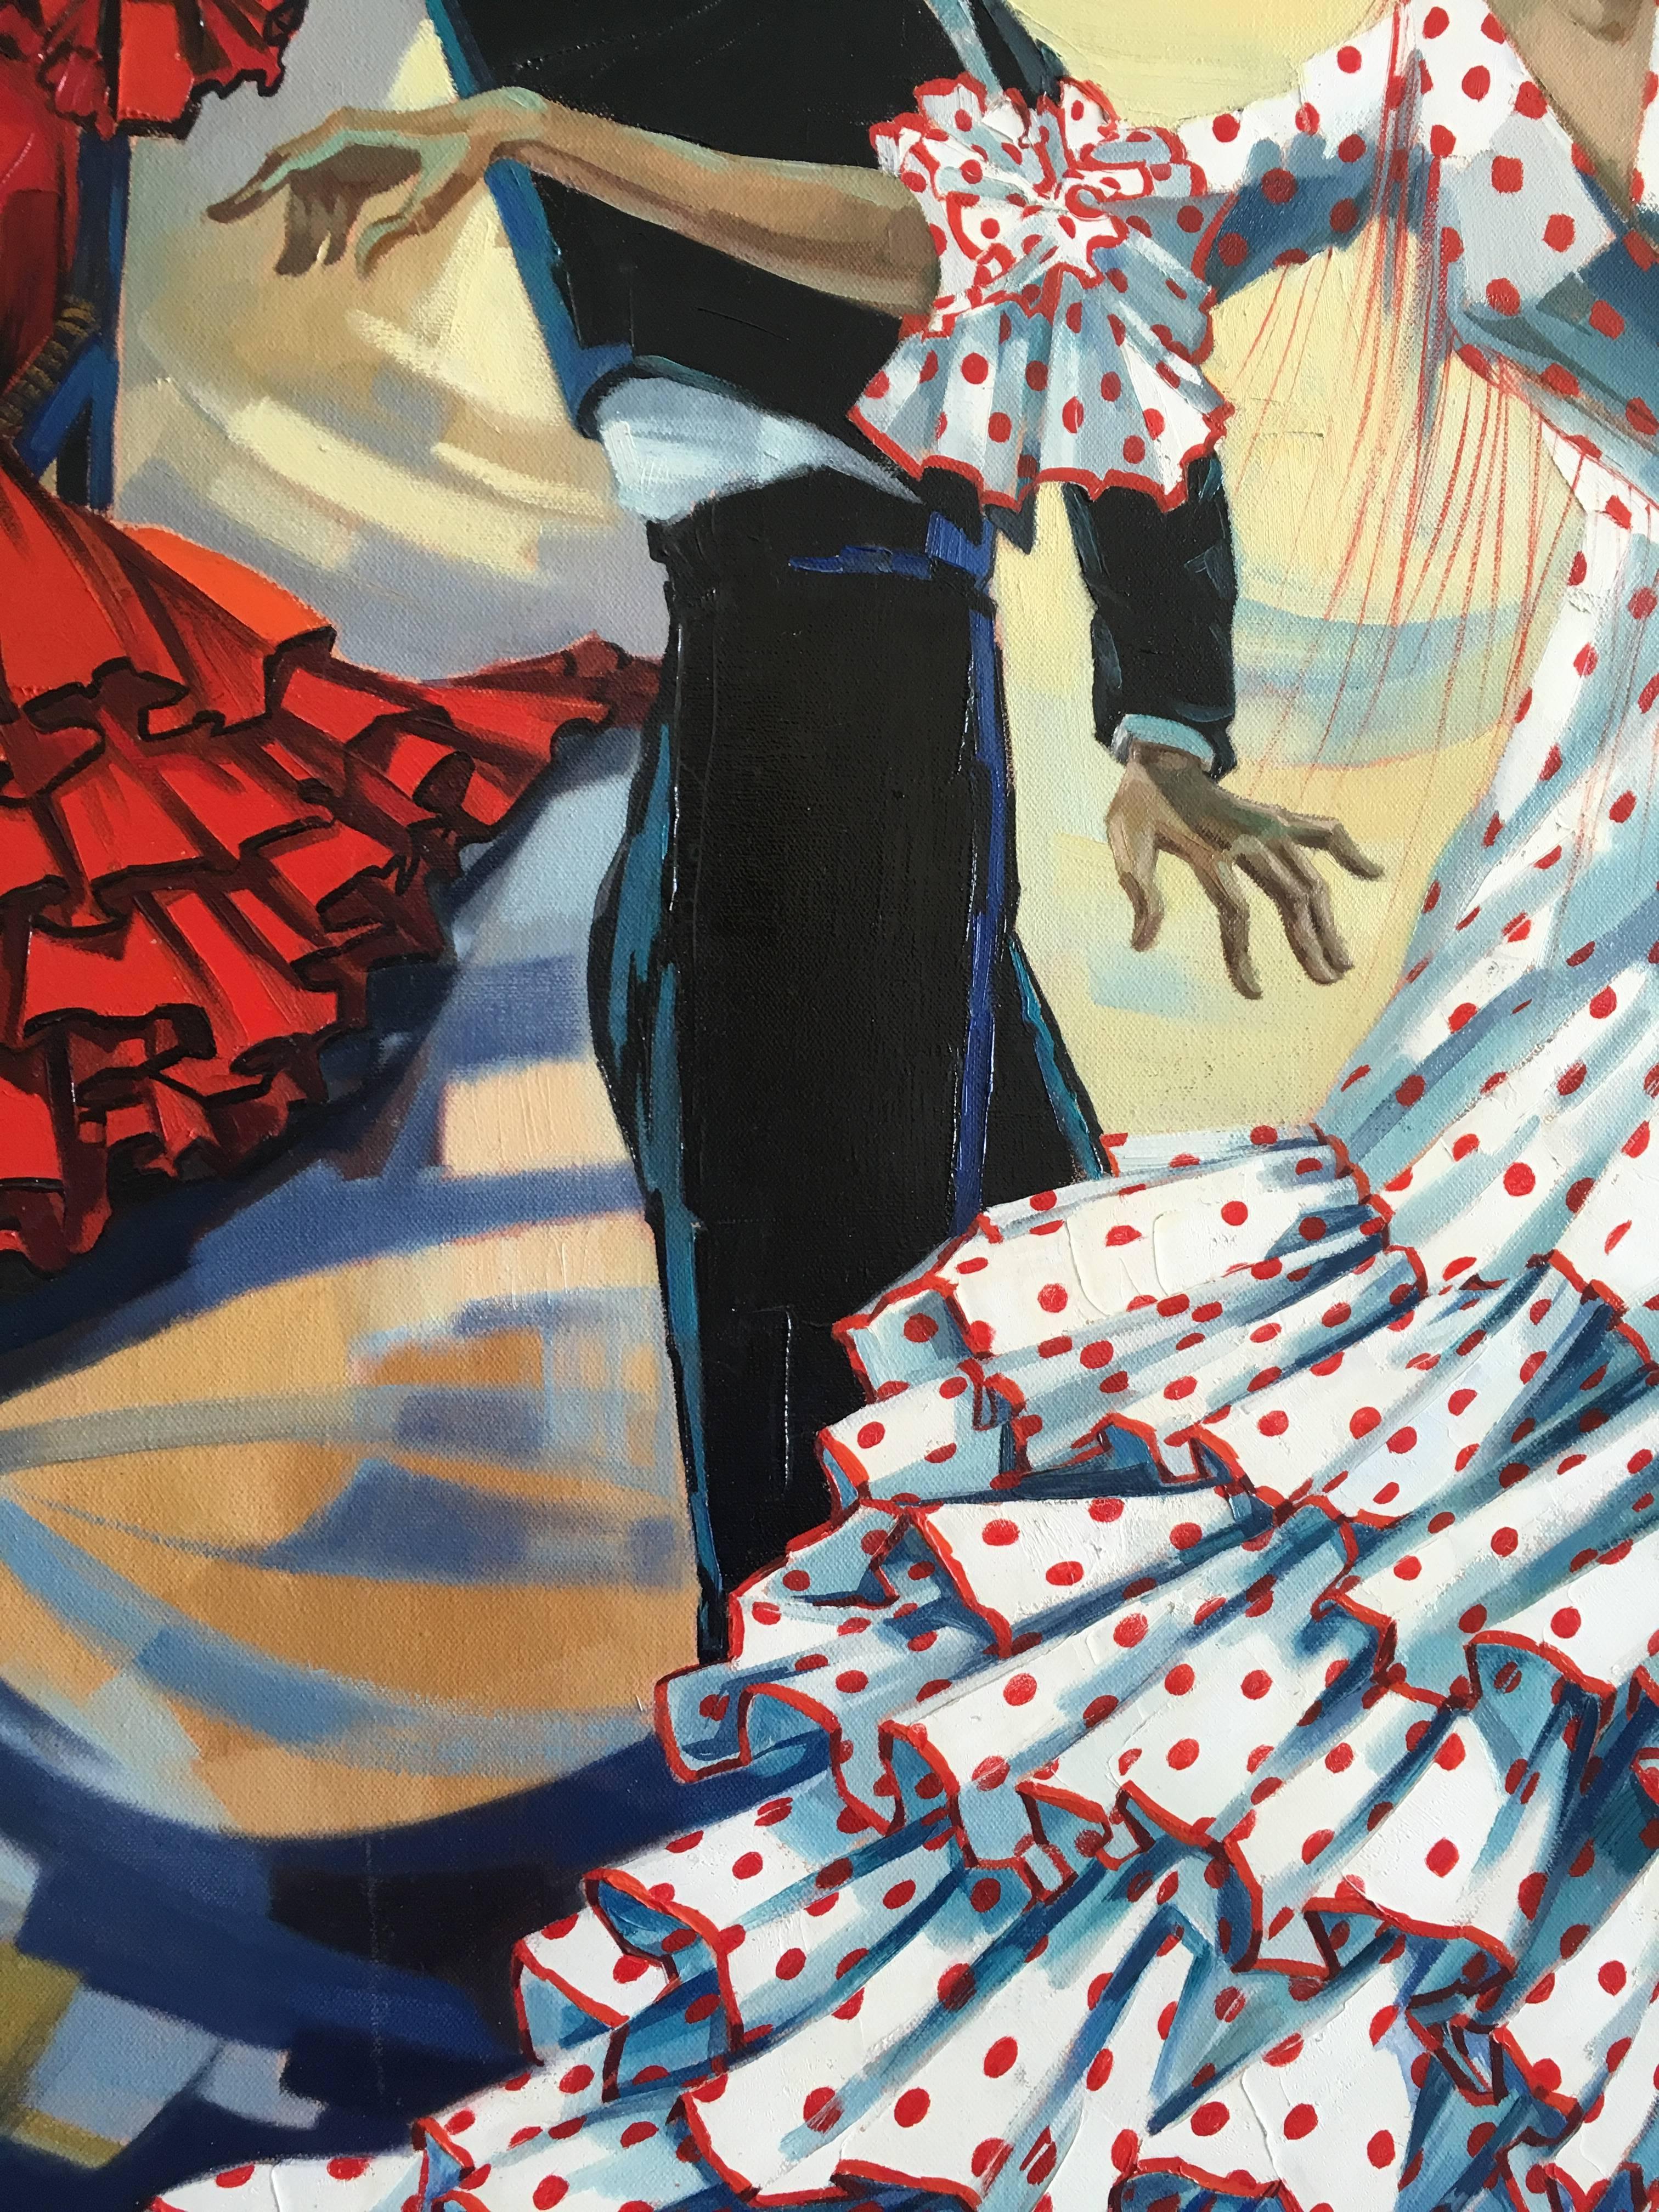 Bulerias, flamenco dance, oil on canvas 6